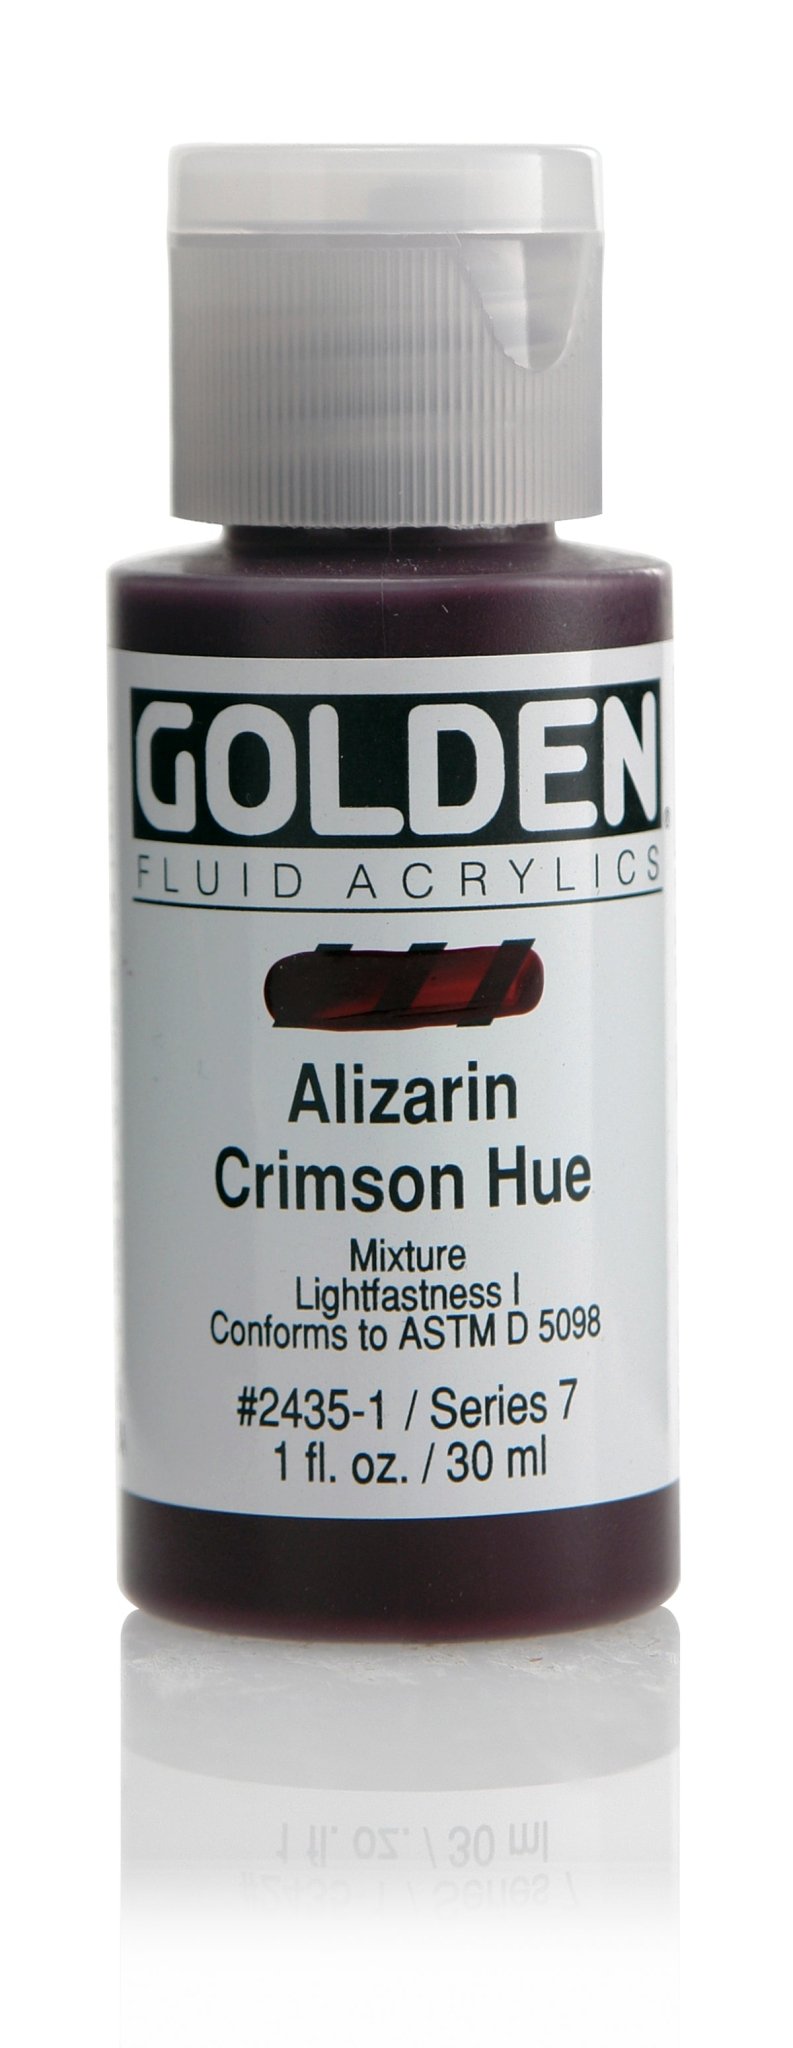 Golden Fluid Acrylics - Alizarin Crimson Hue - 30ml - Create A Little Magic (Pty) Ltd